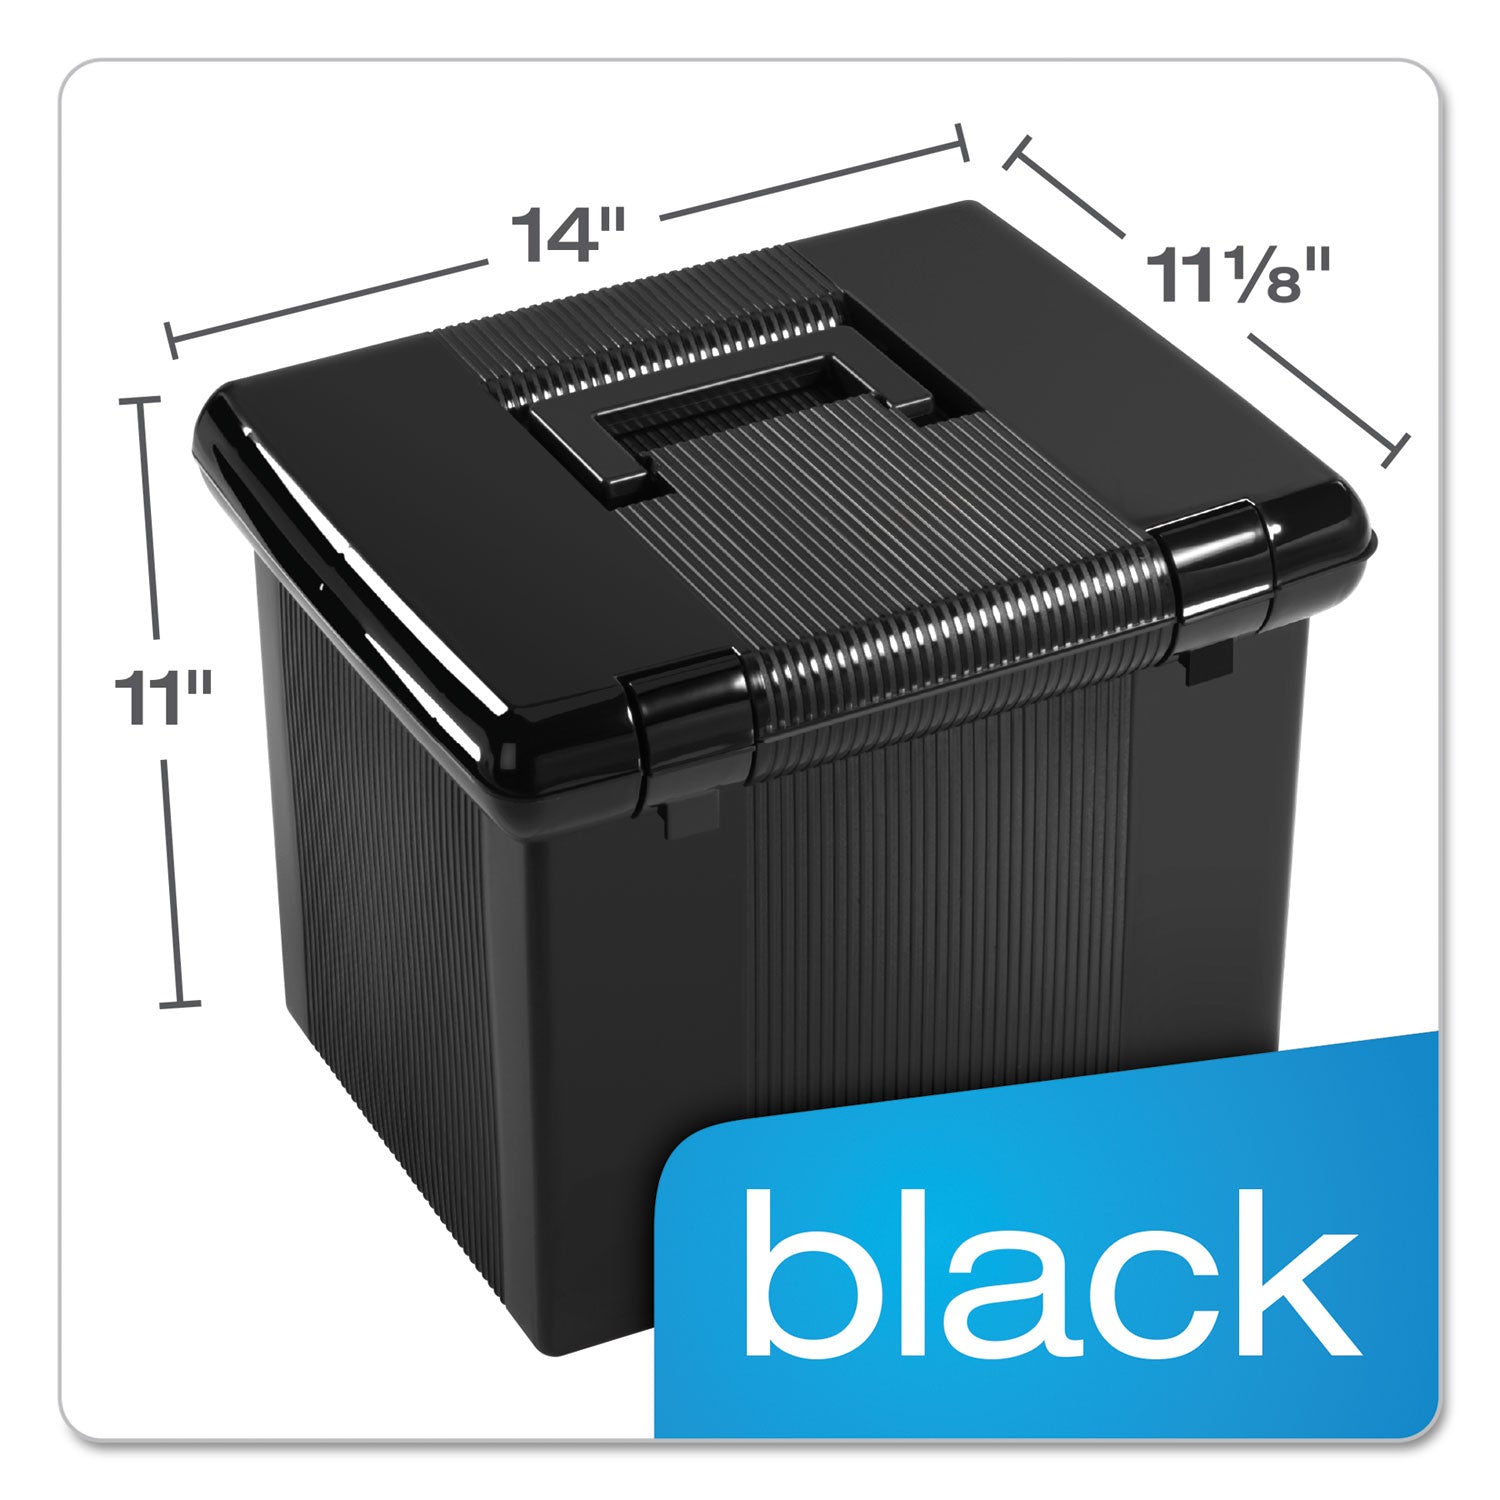 Portable File Boxes, Letter Files, 13.88" x 14" x 11.13", Black - 